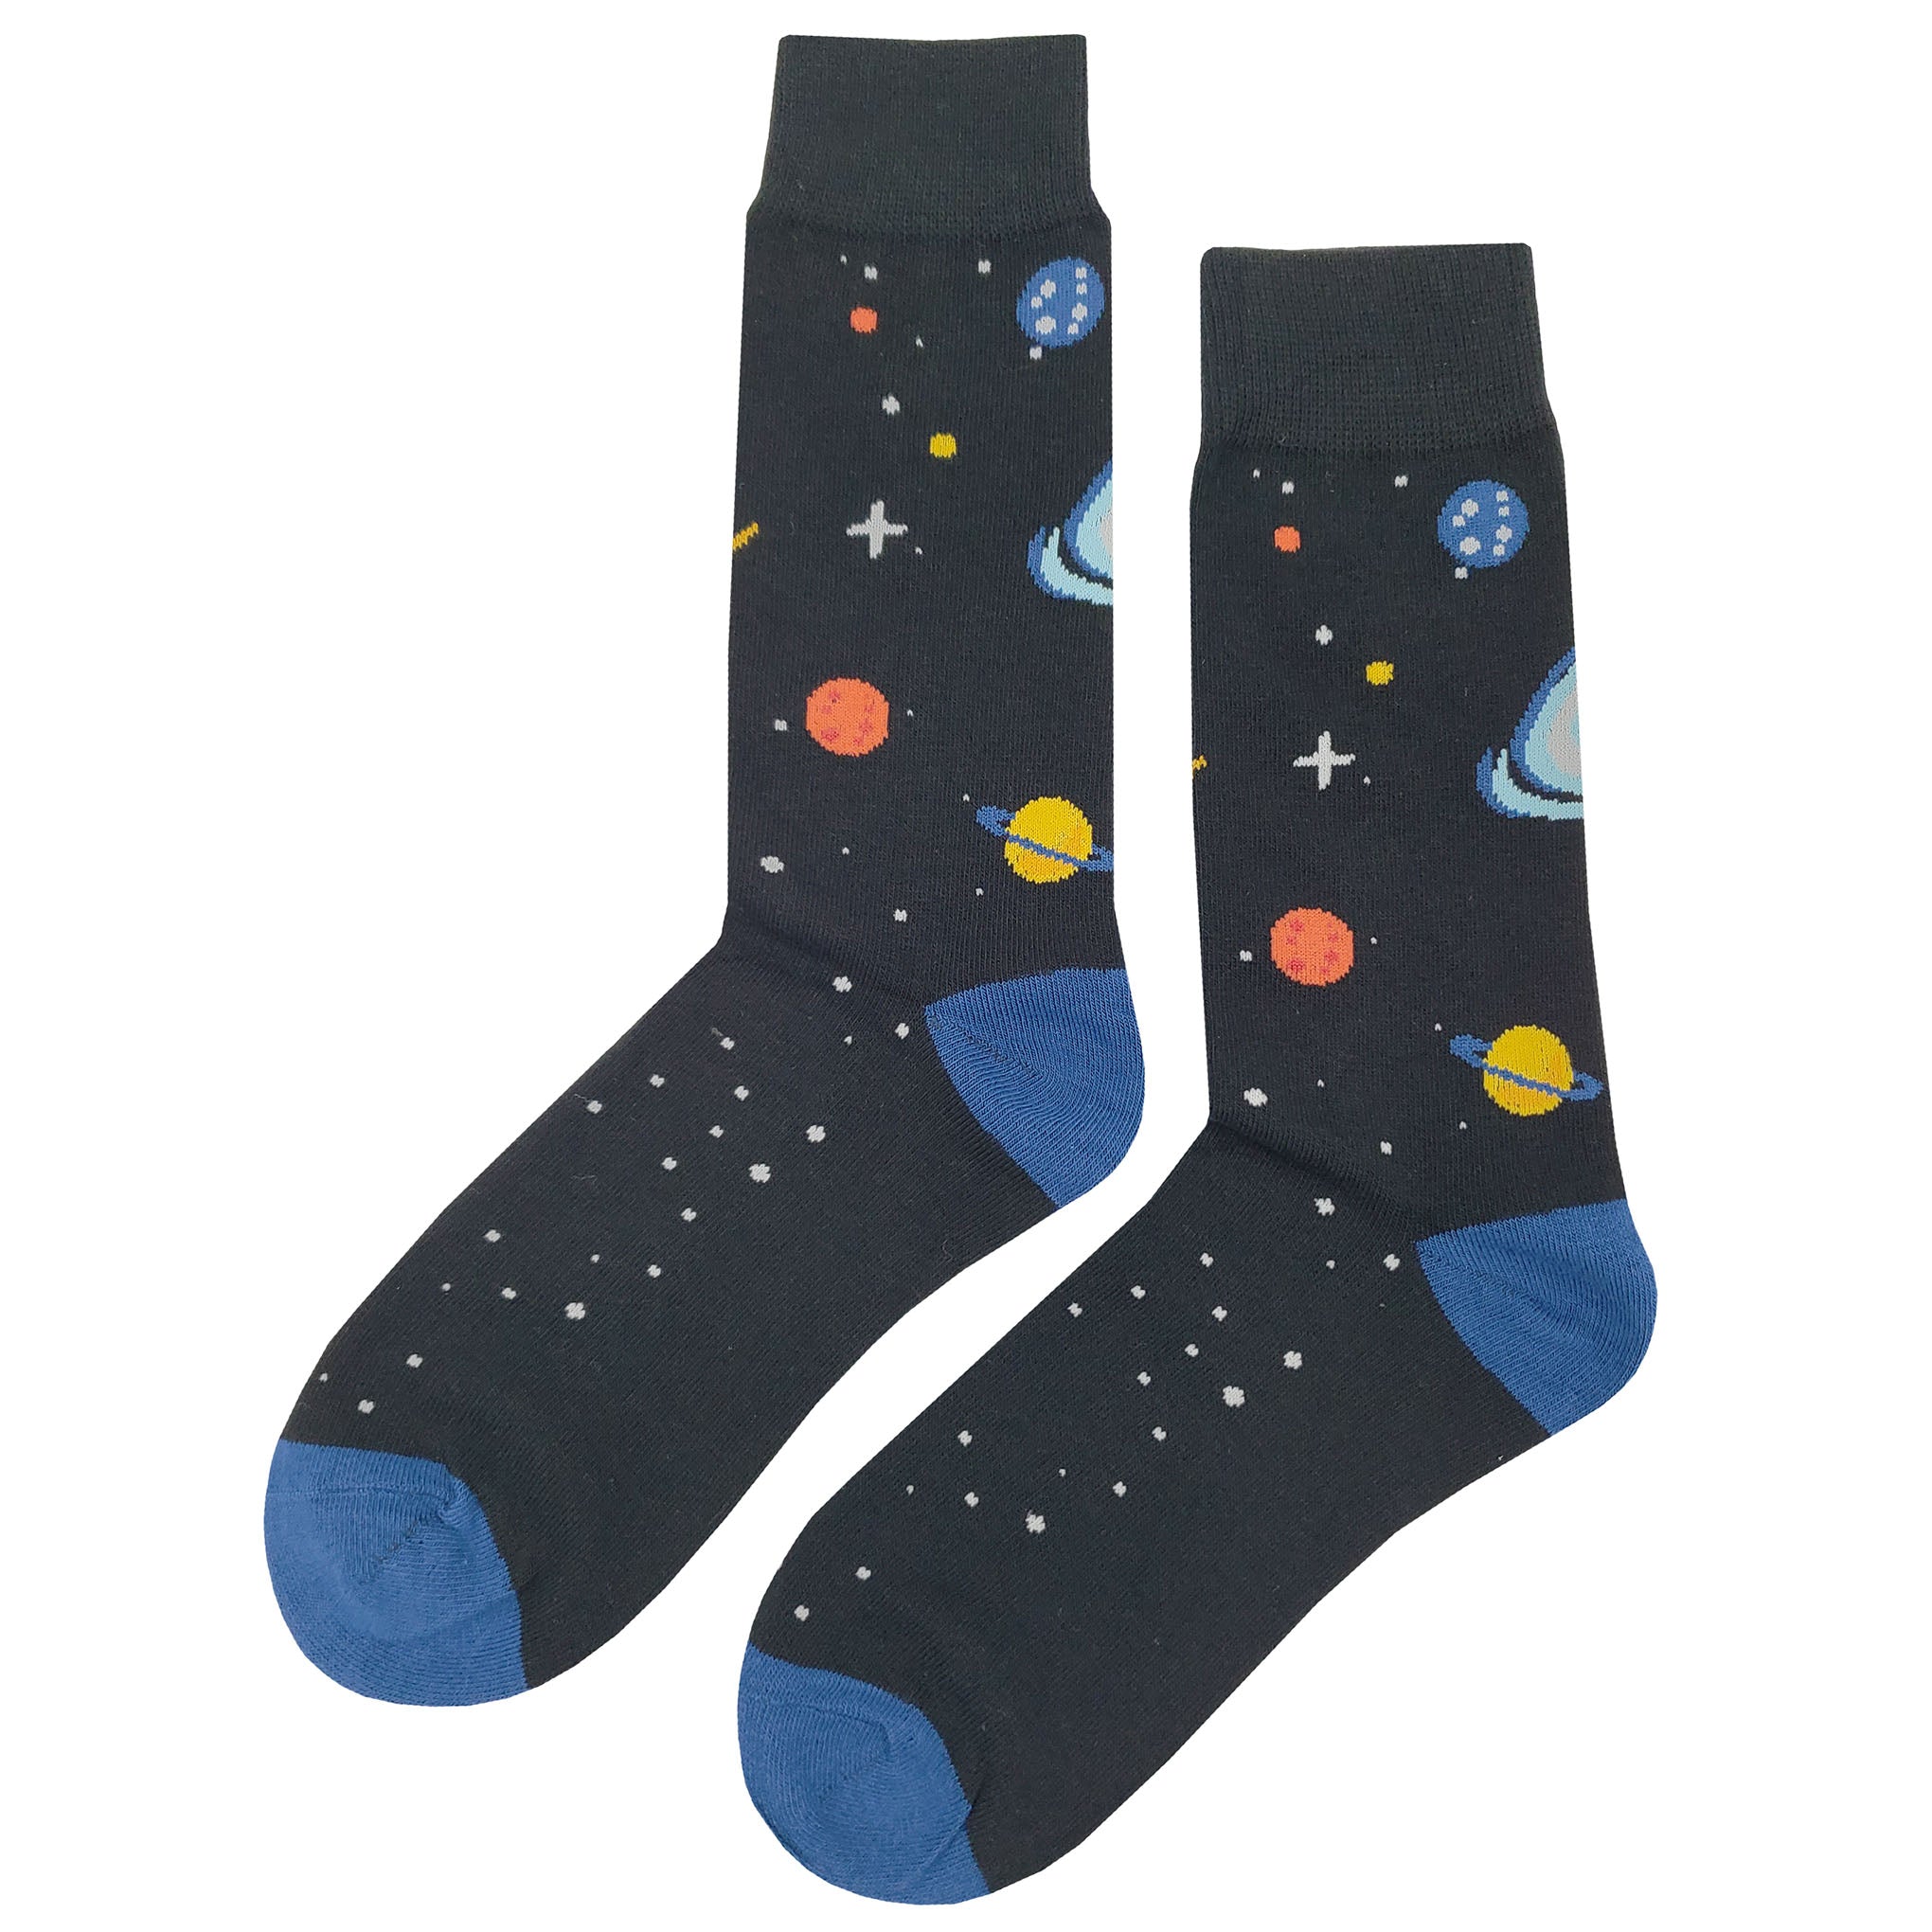 Universe Socks - Fun and Crazy Socks at Sockfly.com